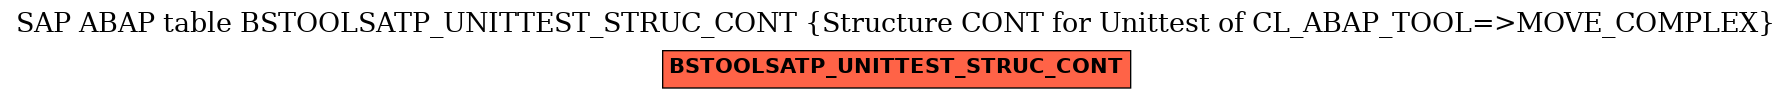 E-R Diagram for table BSTOOLSATP_UNITTEST_STRUC_CONT (Structure CONT for Unittest of CL_ABAP_TOOL=>MOVE_COMPLEX)